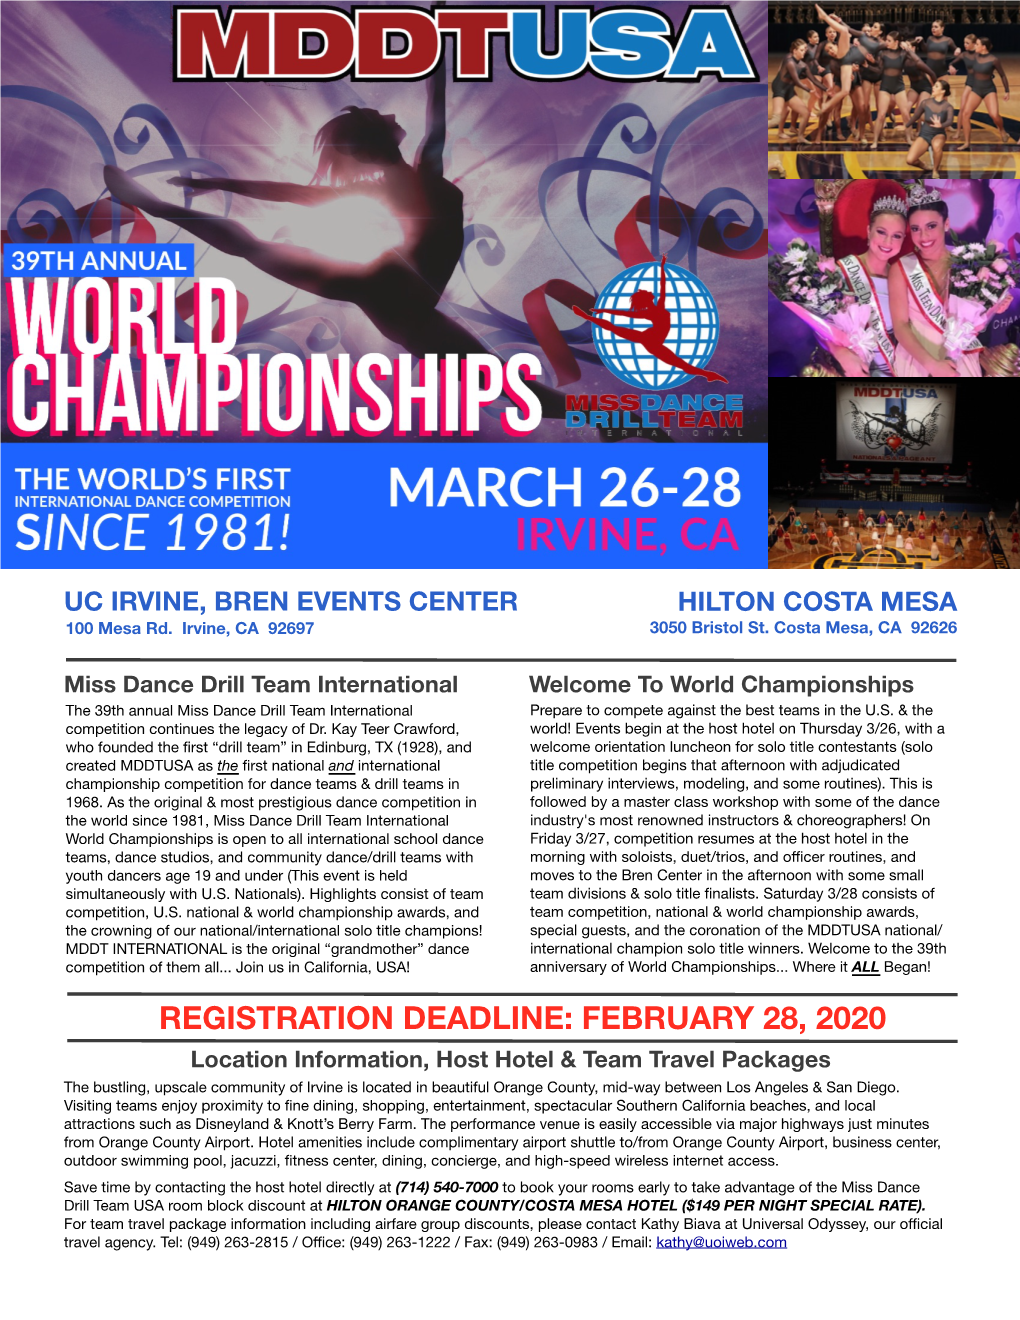 2020 World Championships Information